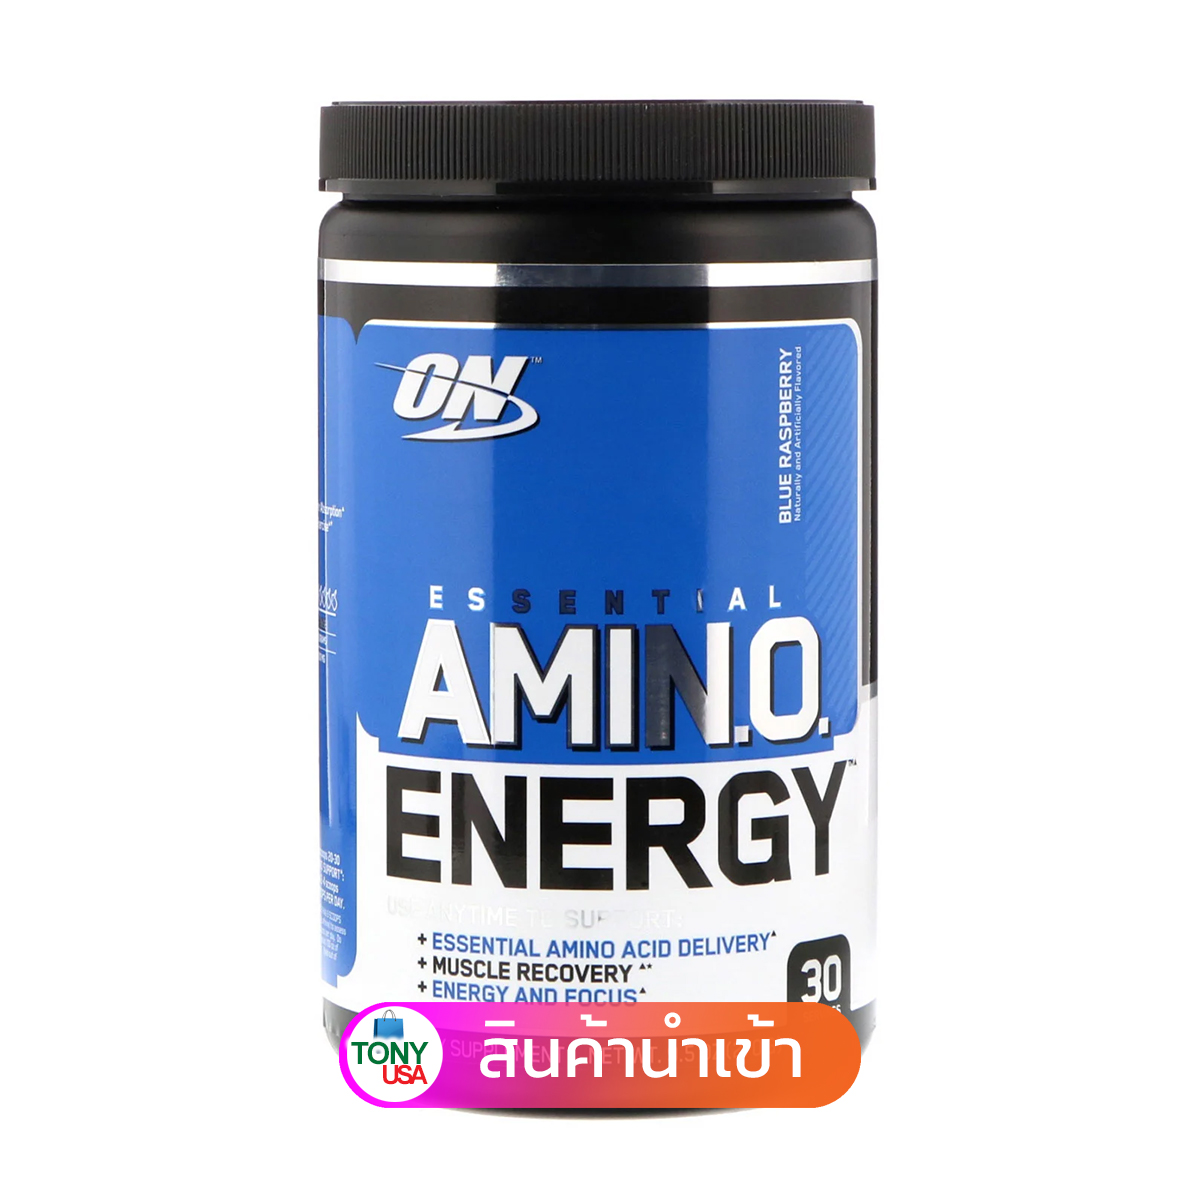 Optimum Nutrition, ESSENTIAL AMIN.O. ENERGY, Blue Raspberry, 9.5 oz (270 g) บลู ราสเบอร์รี่ ราสเบอรี่ อะมิโน อมิโน แอซิด พรีเวิร์คเอ้าท์ ก่อนออกกำลังกาย on amino energy